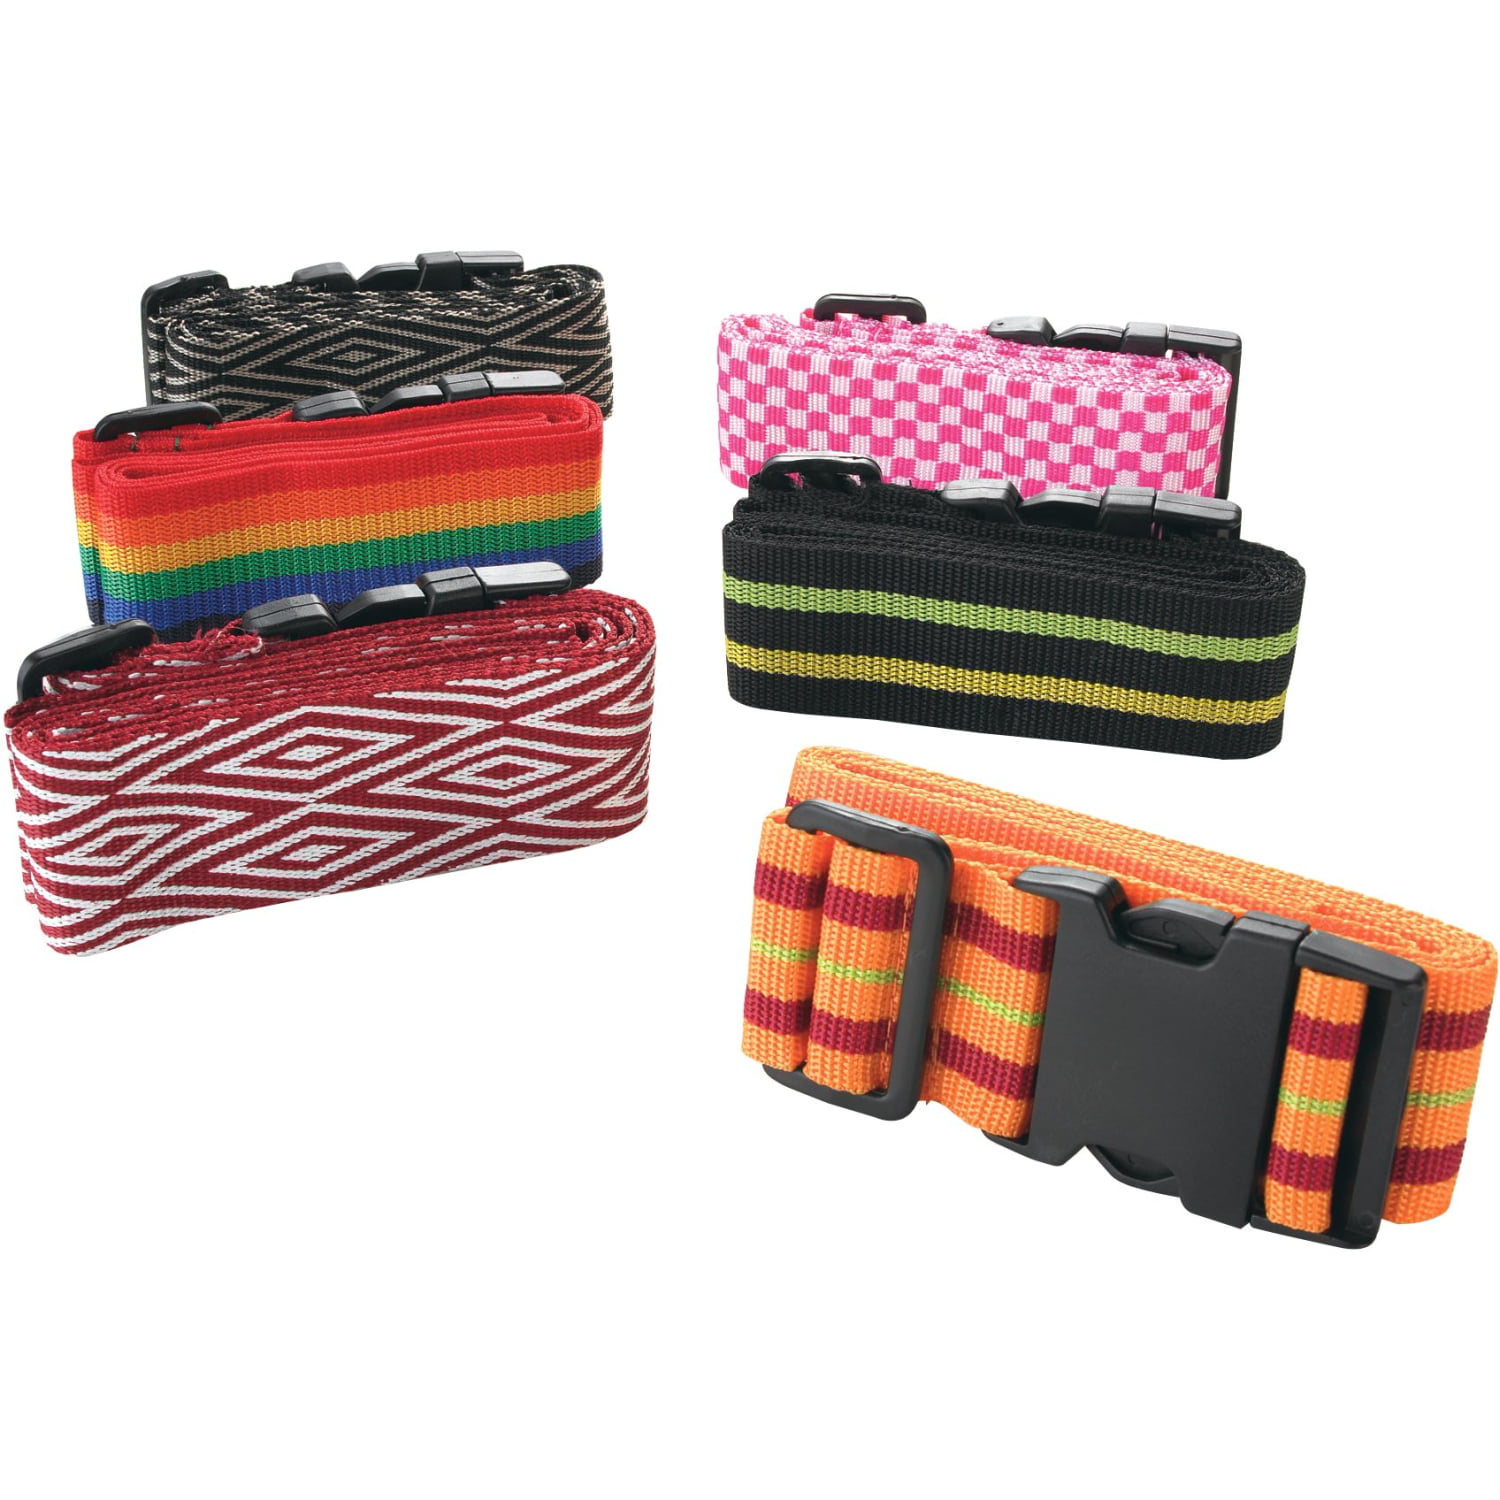 Lvcky Black Travel Luggage Straps Adjustable Suitcase Belts 2 Pack 